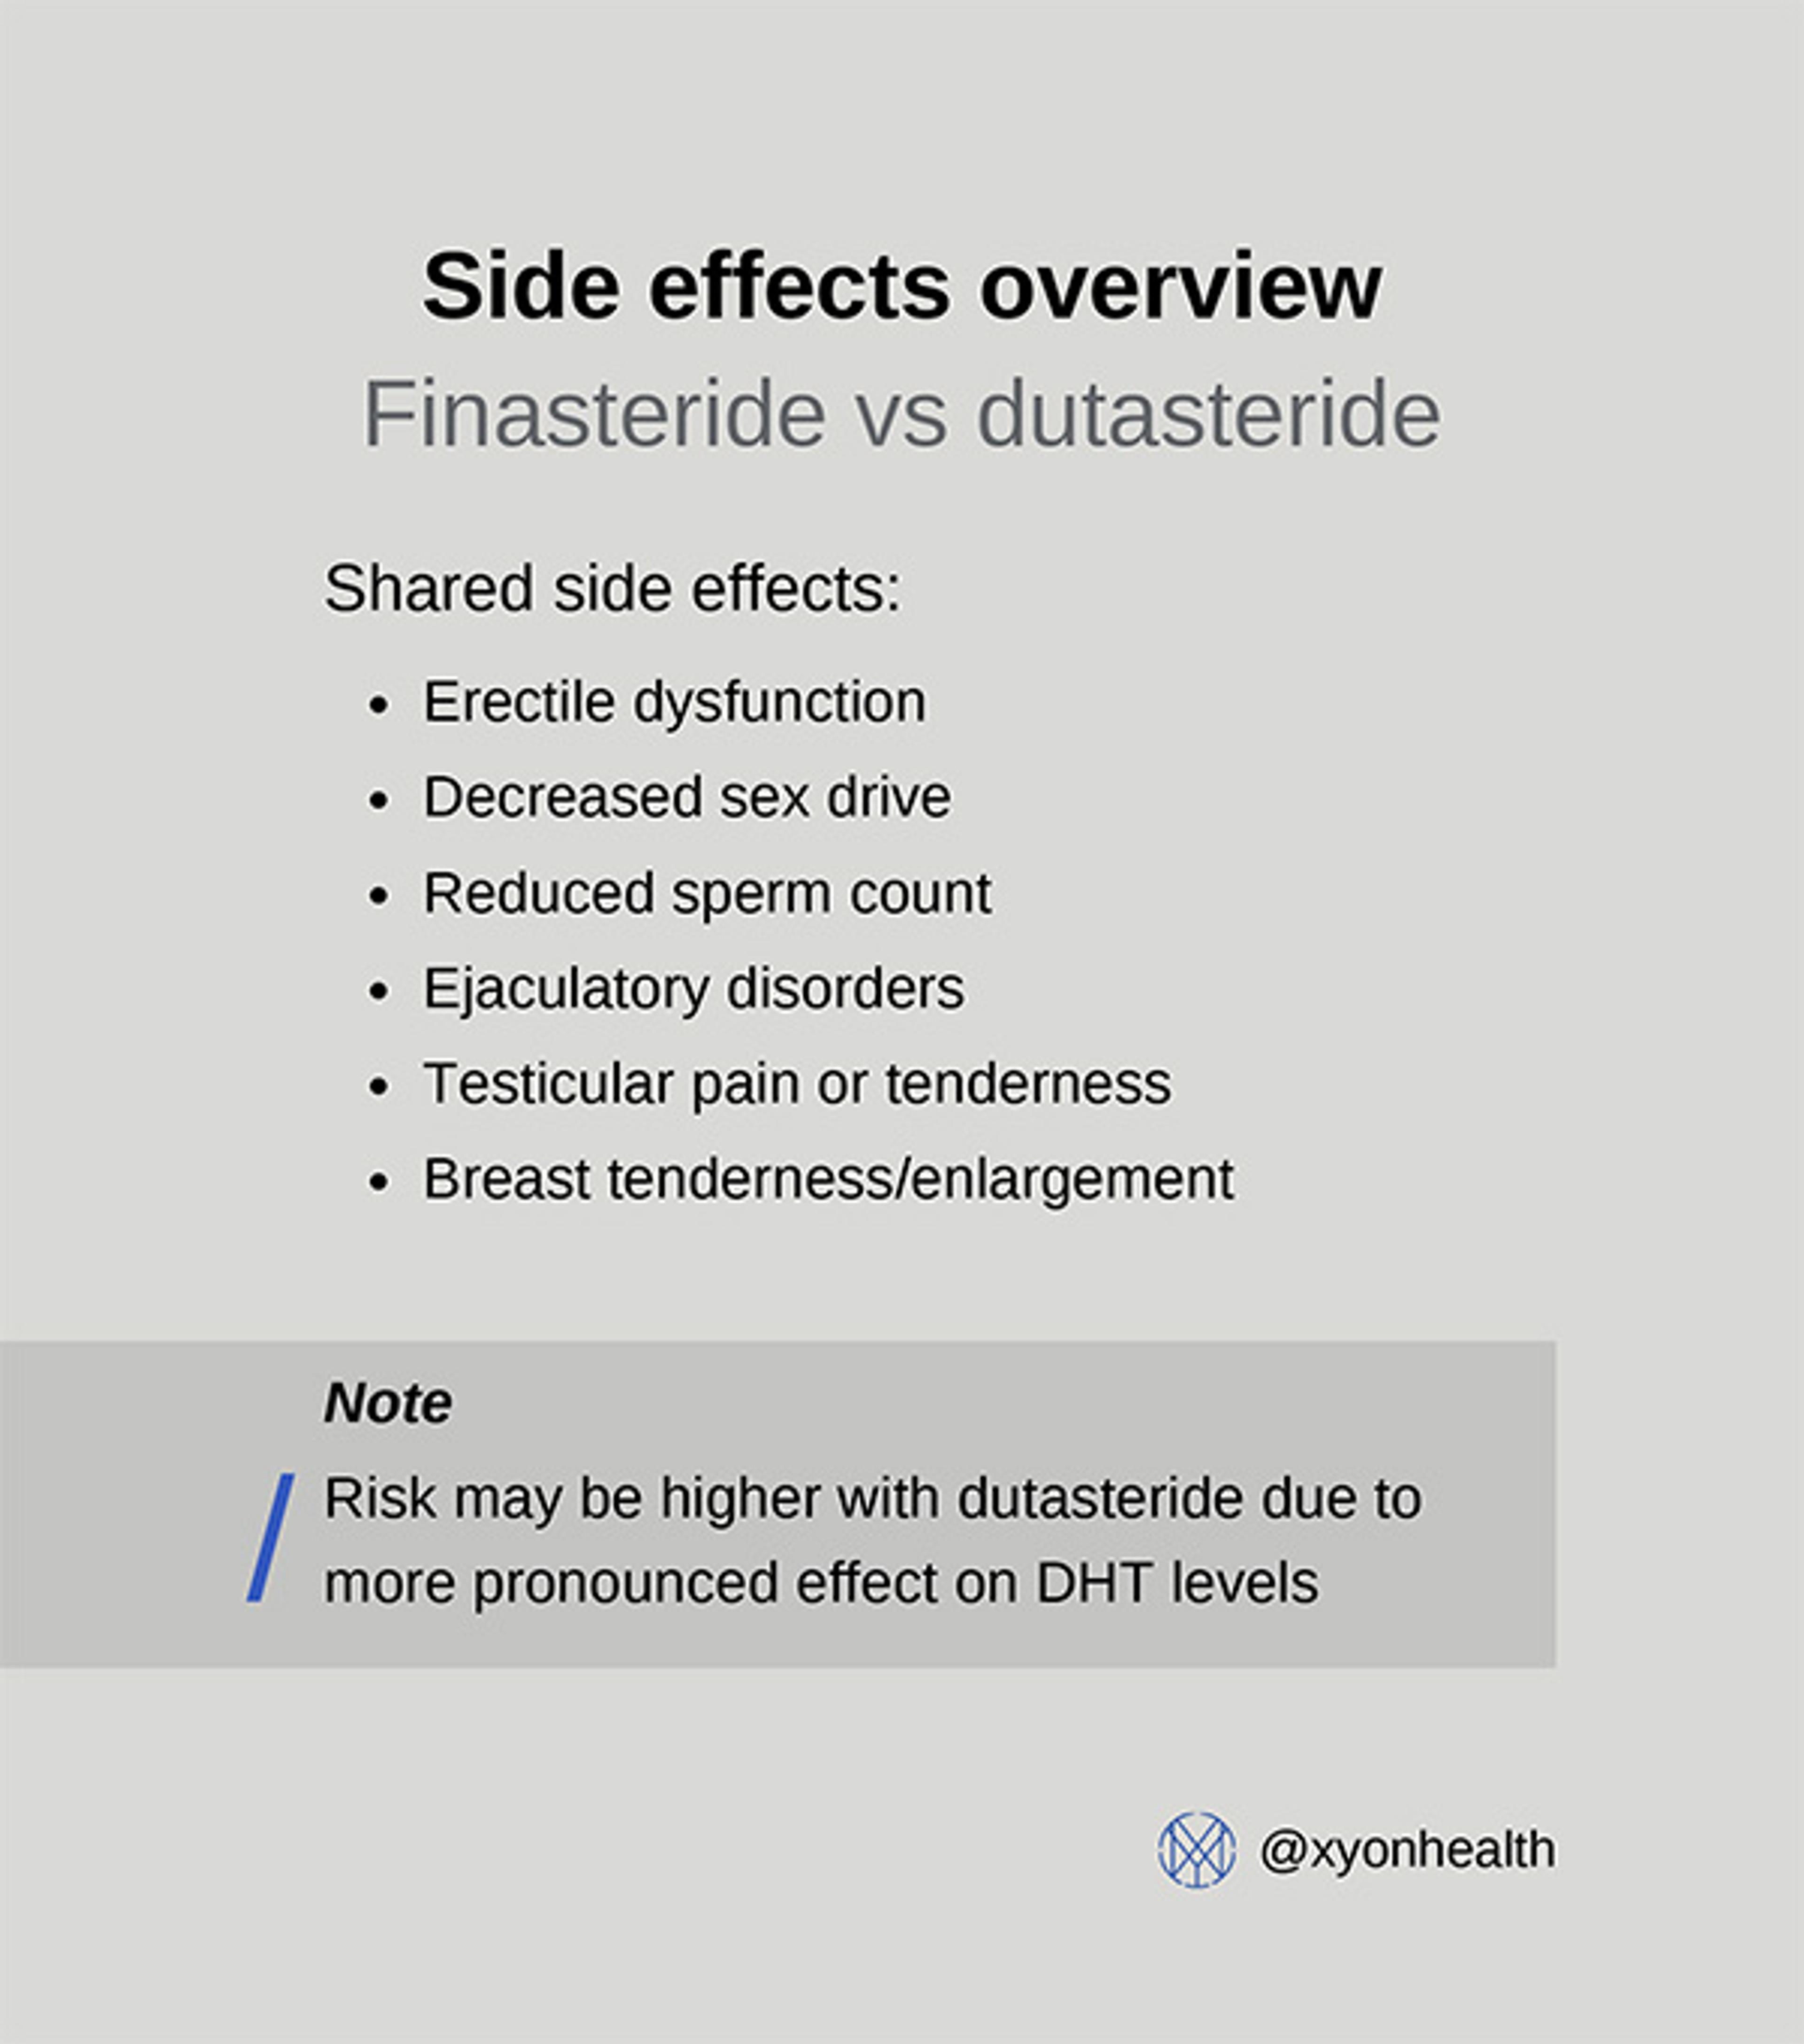 A comparison of finasteride vs dutasteride side effects.